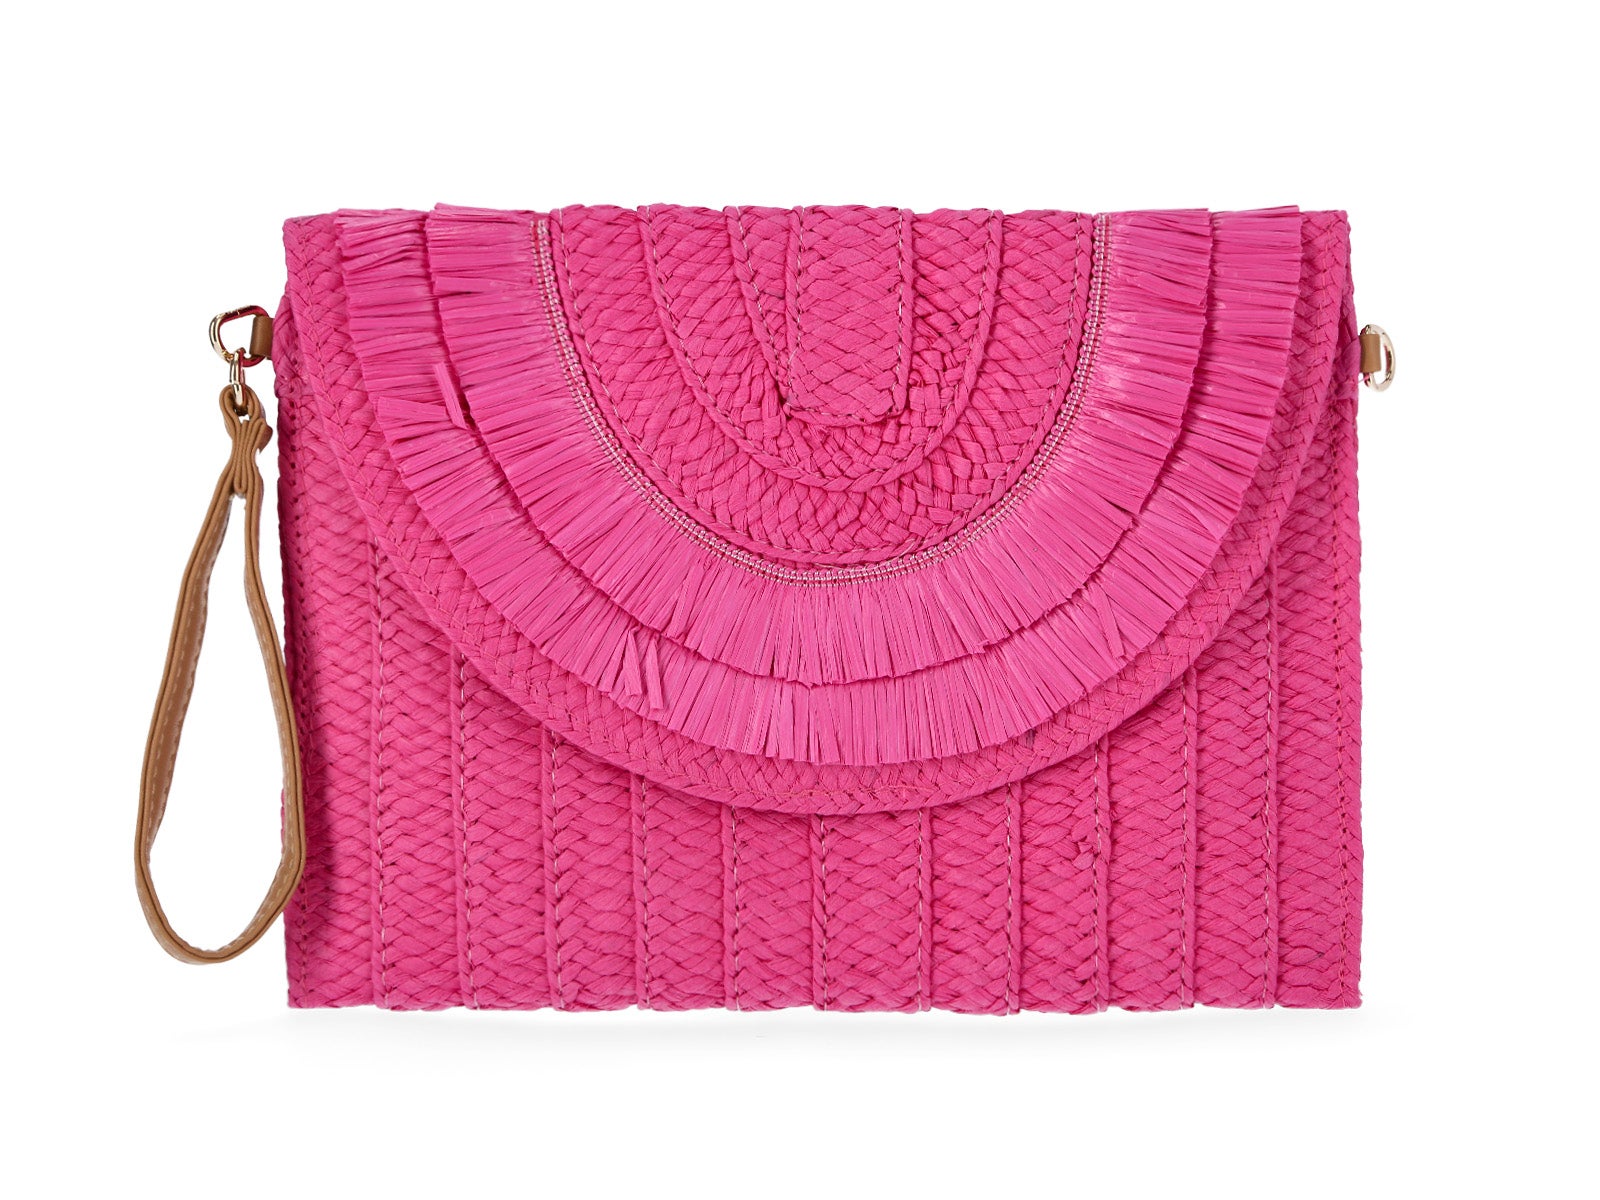 Azzra Pink Fringed Design Golden Chain Sling Bag, 200 G at Rs 1169 in Jaipur